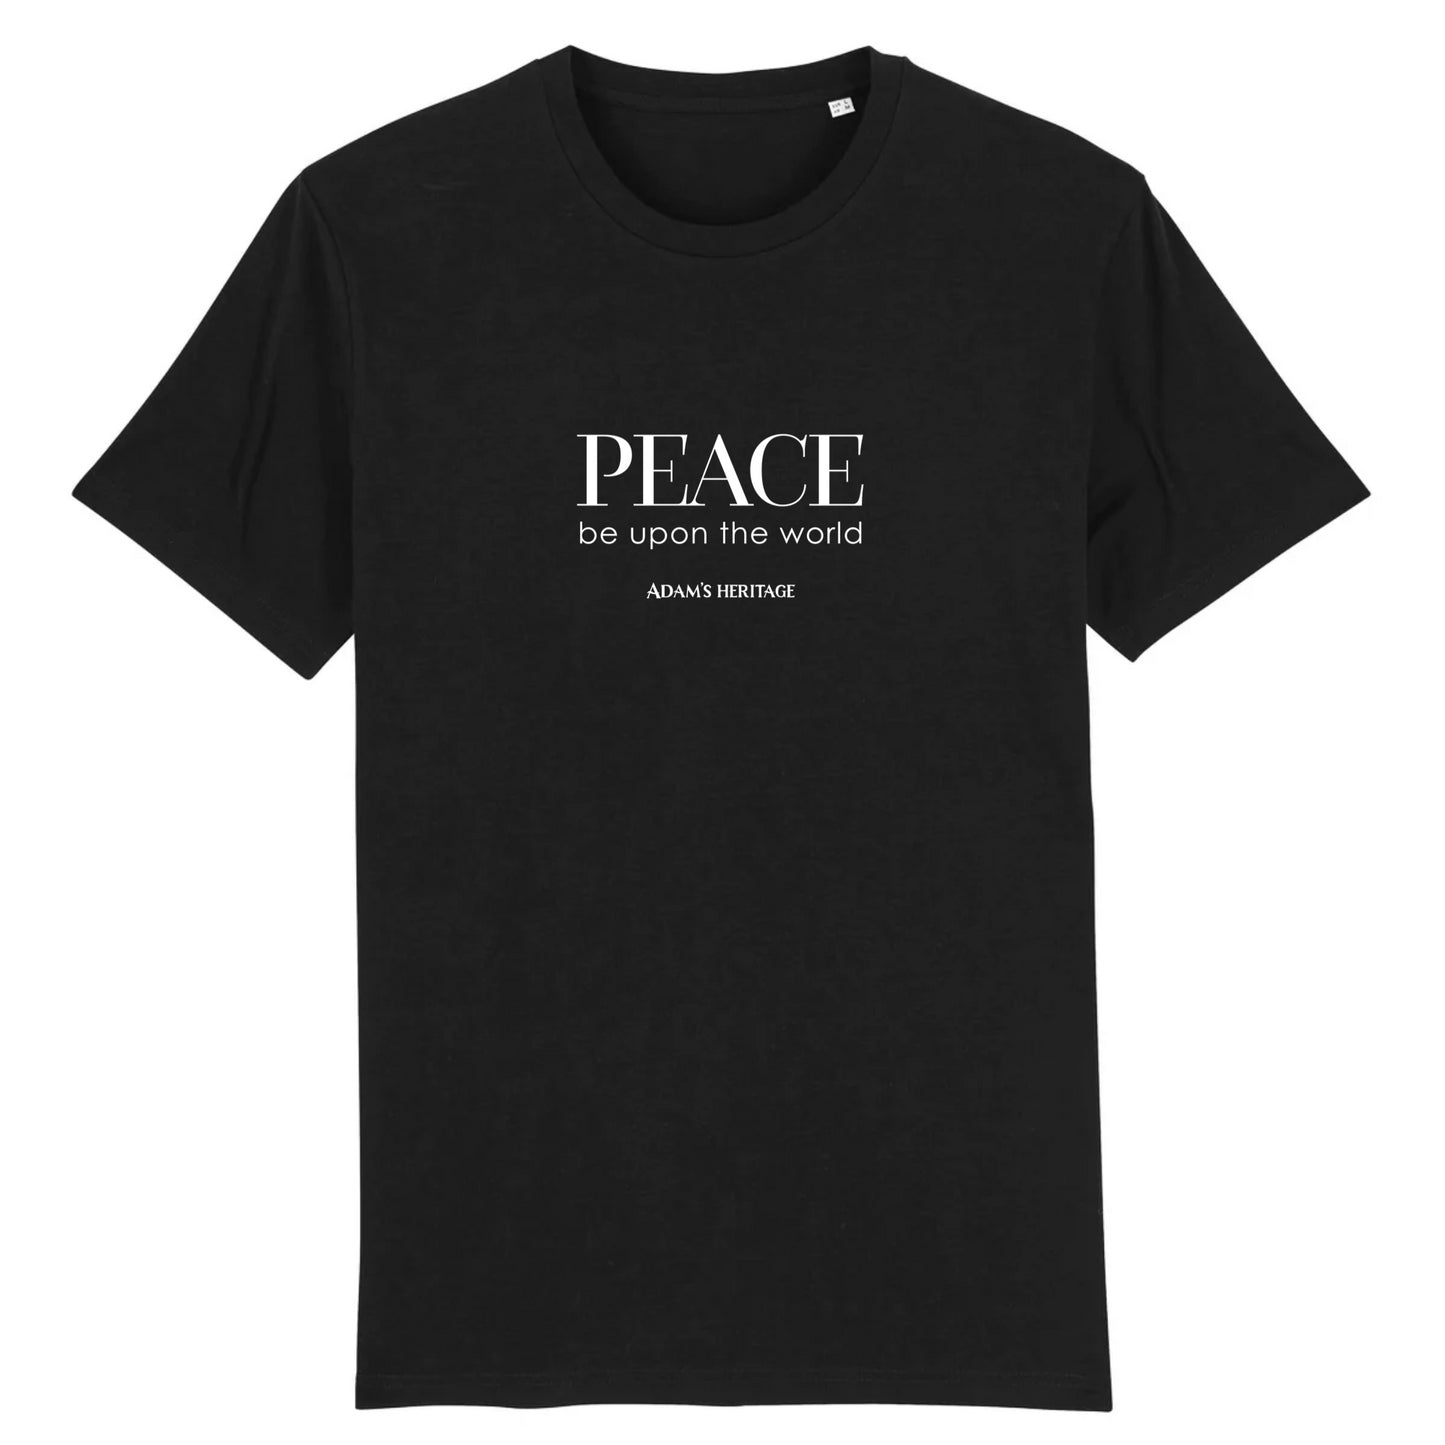 Peace be upon the world - T-shirt men black